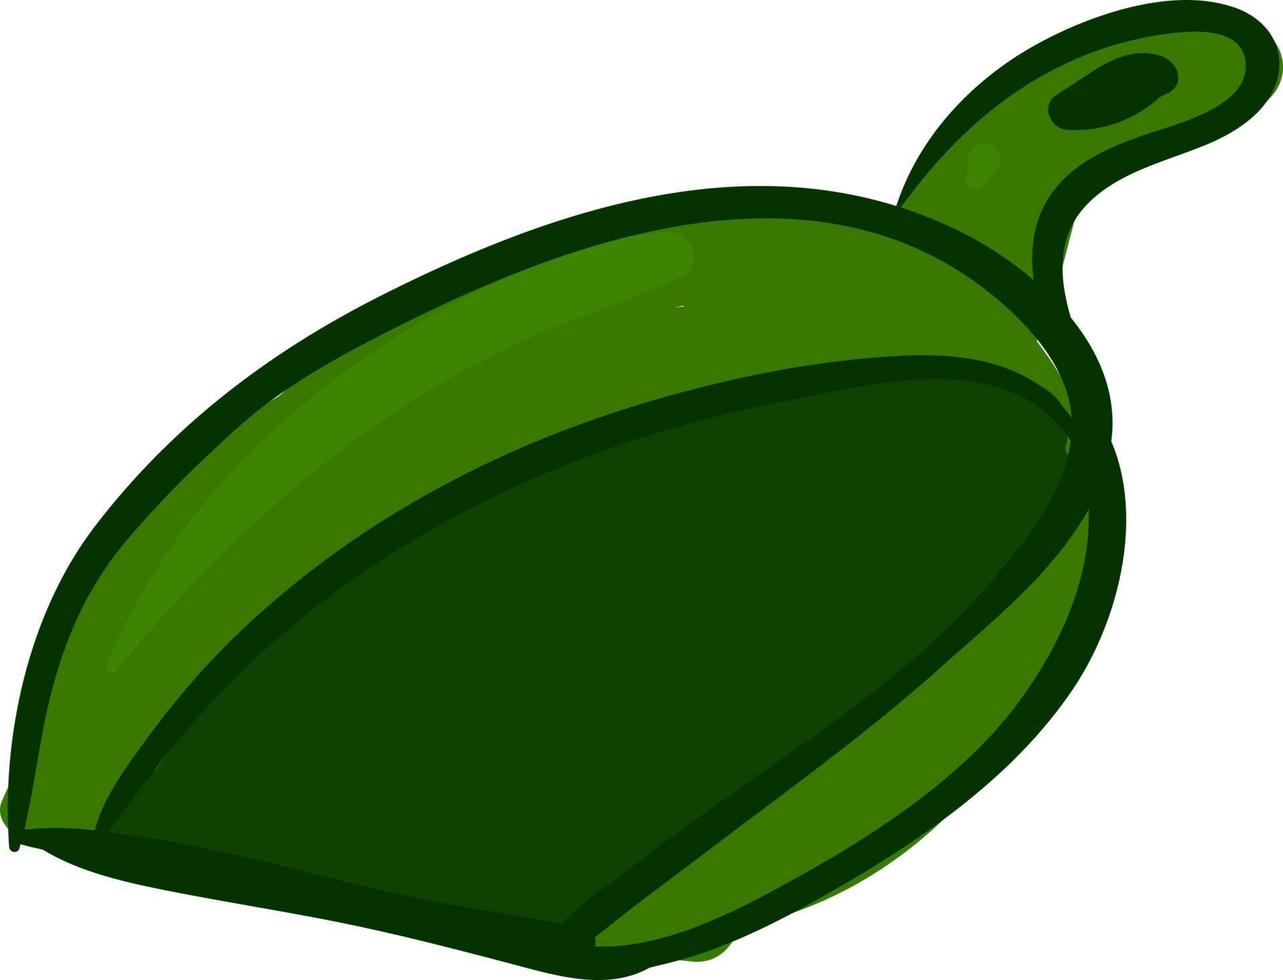 Green scoop, illustration, vector on white background